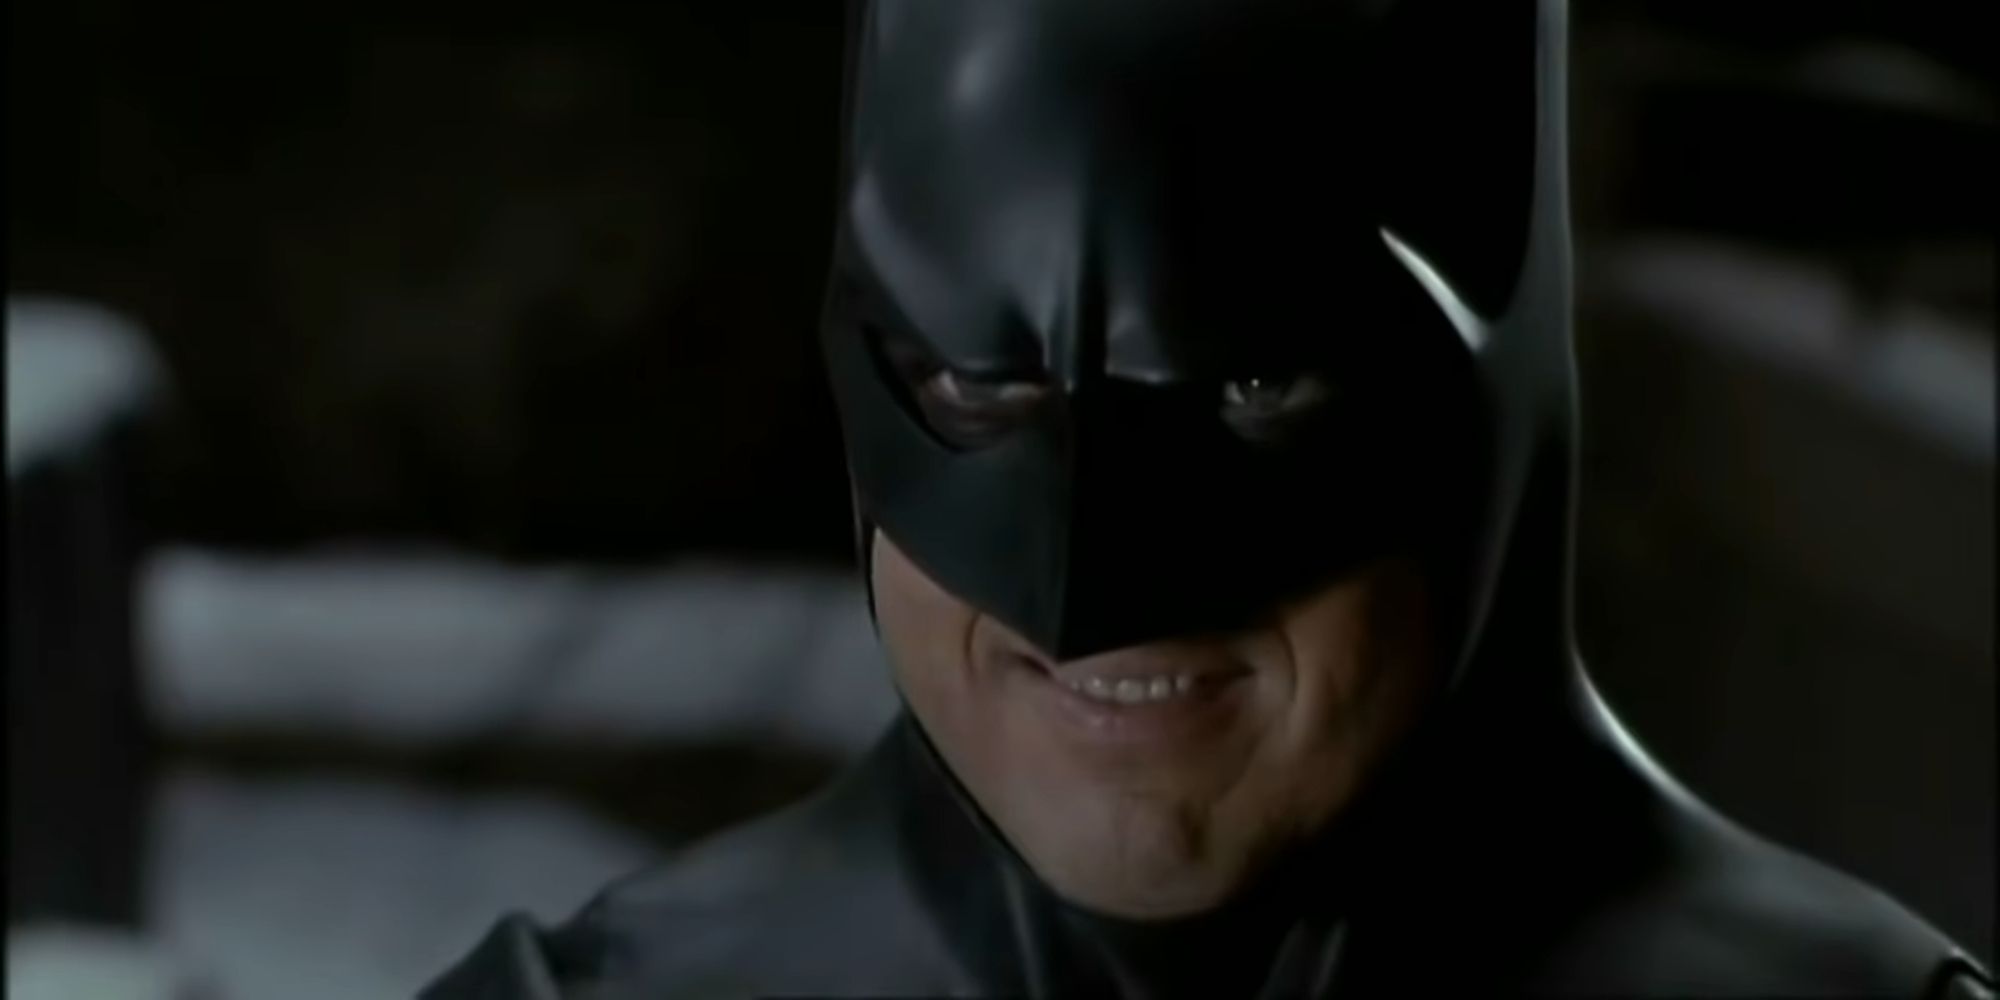 Batman giving a creepy smile in Batman Returns